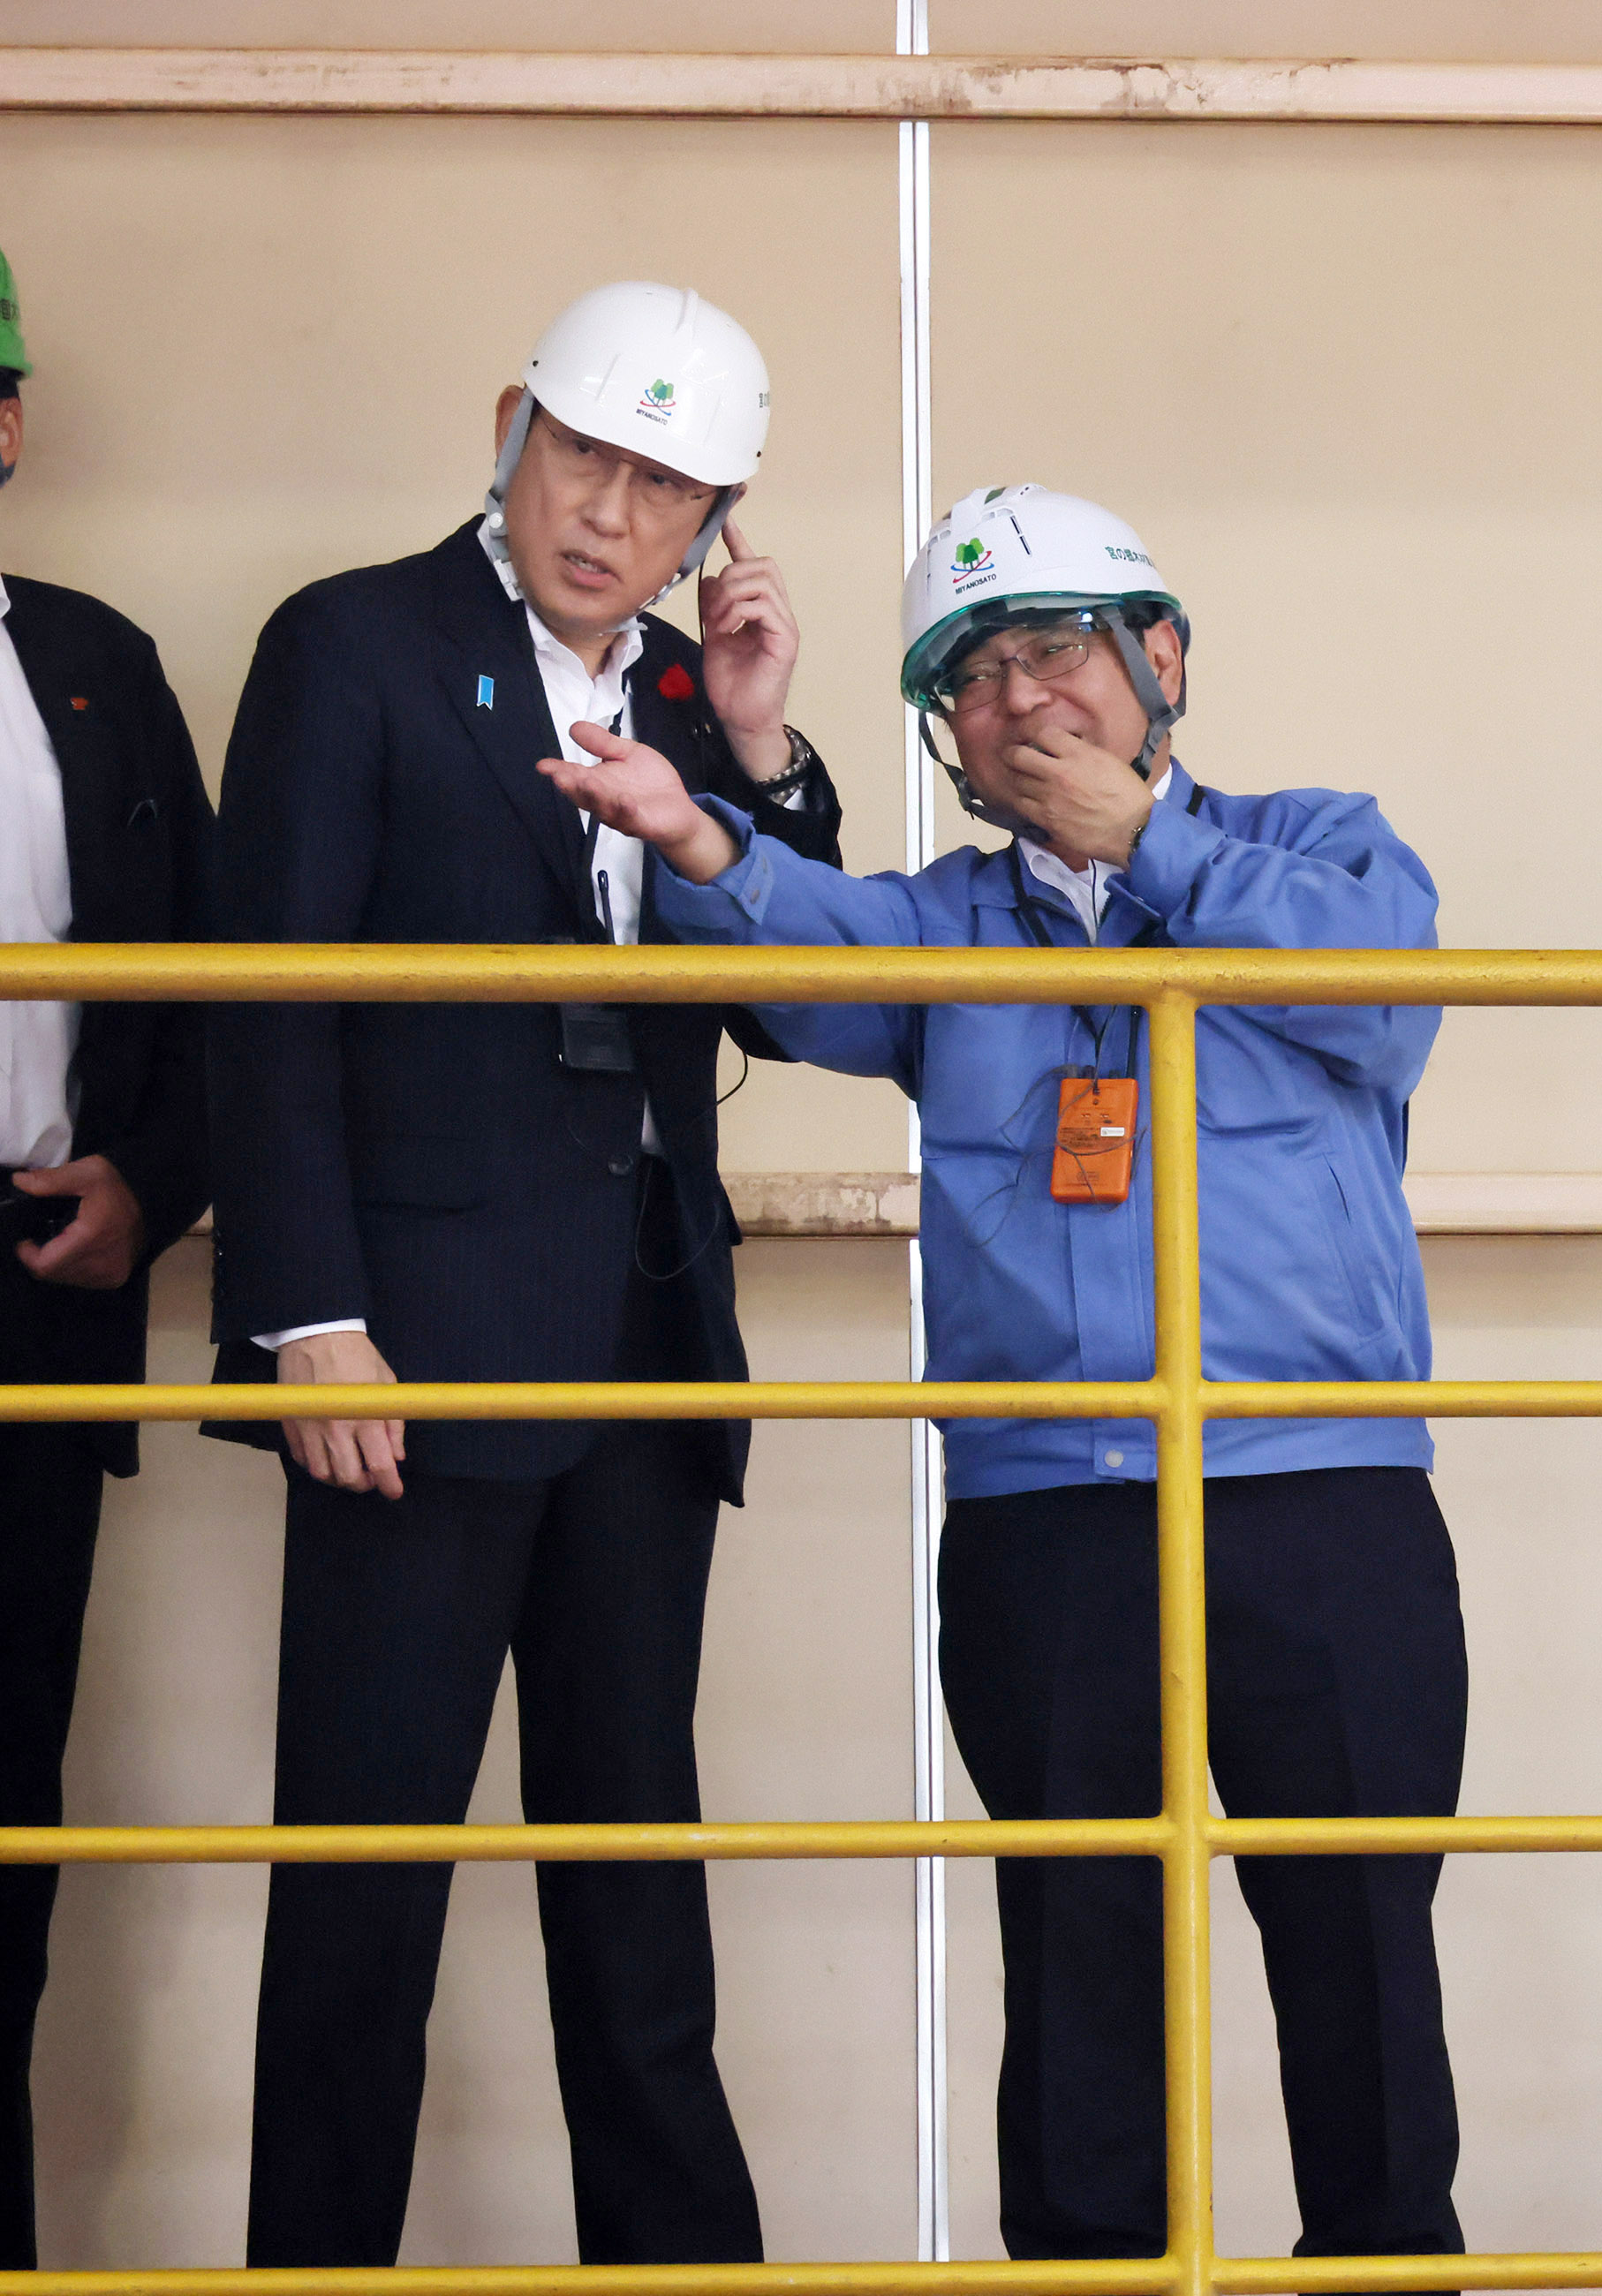 Prime Minister Kishida visiting a sawmill factory (1)